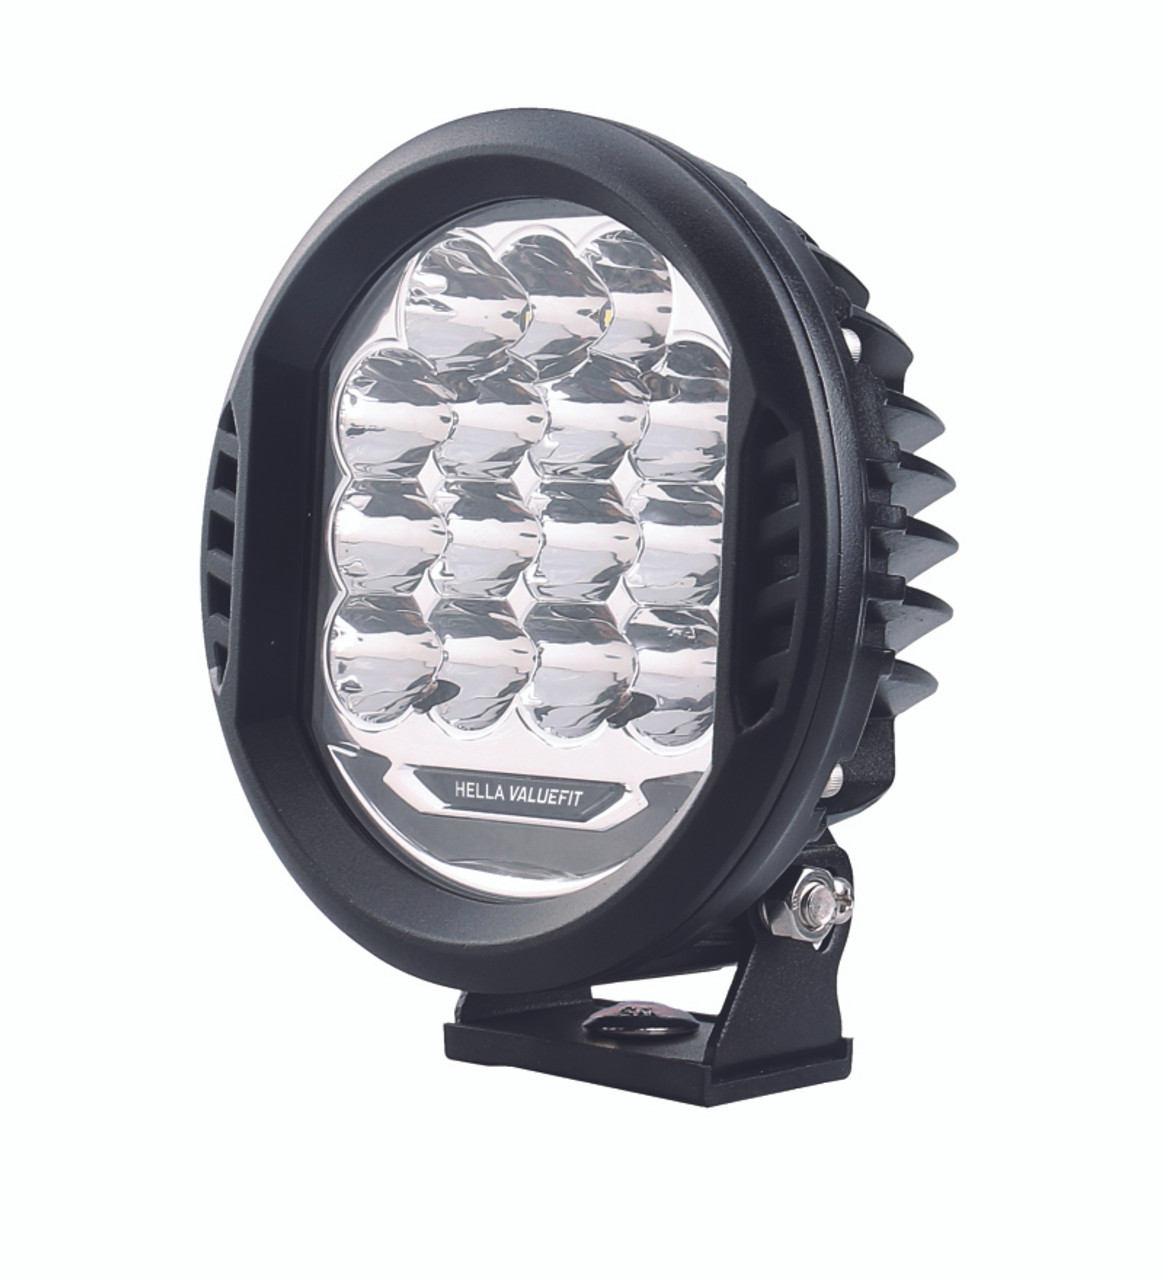 Buy Hella 500 LED Driving Lamp Kit - 358117171 for 202.37 at Armageddon  Turbo & Performance